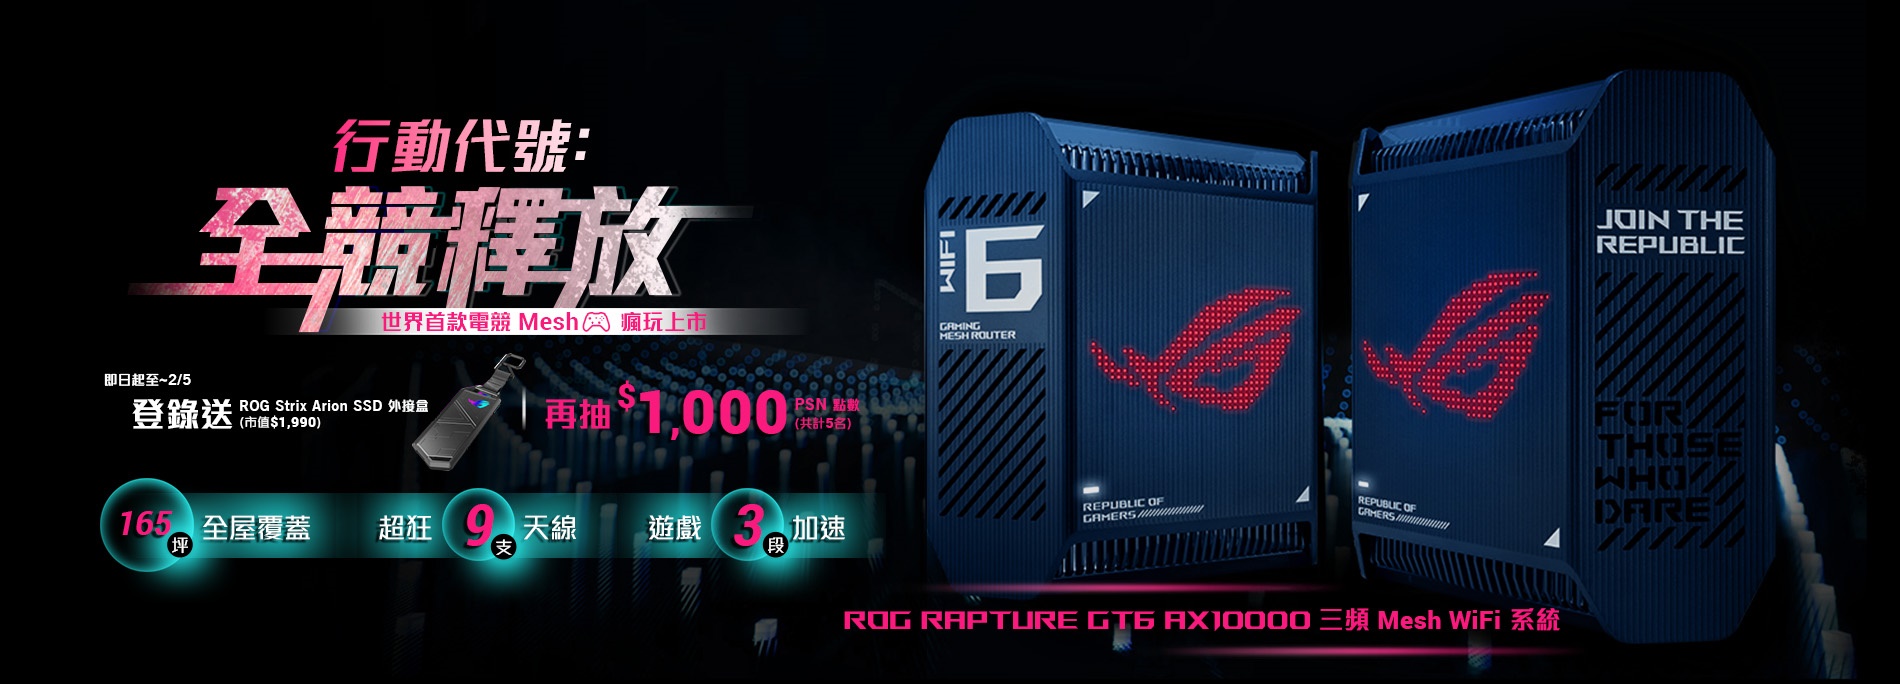 『行動代號 : 全競釋放 』買ROG Rapture GT6 全球首款電競 Mesh 系統，登錄就送『ROG Strix Arion SSD外接盒』